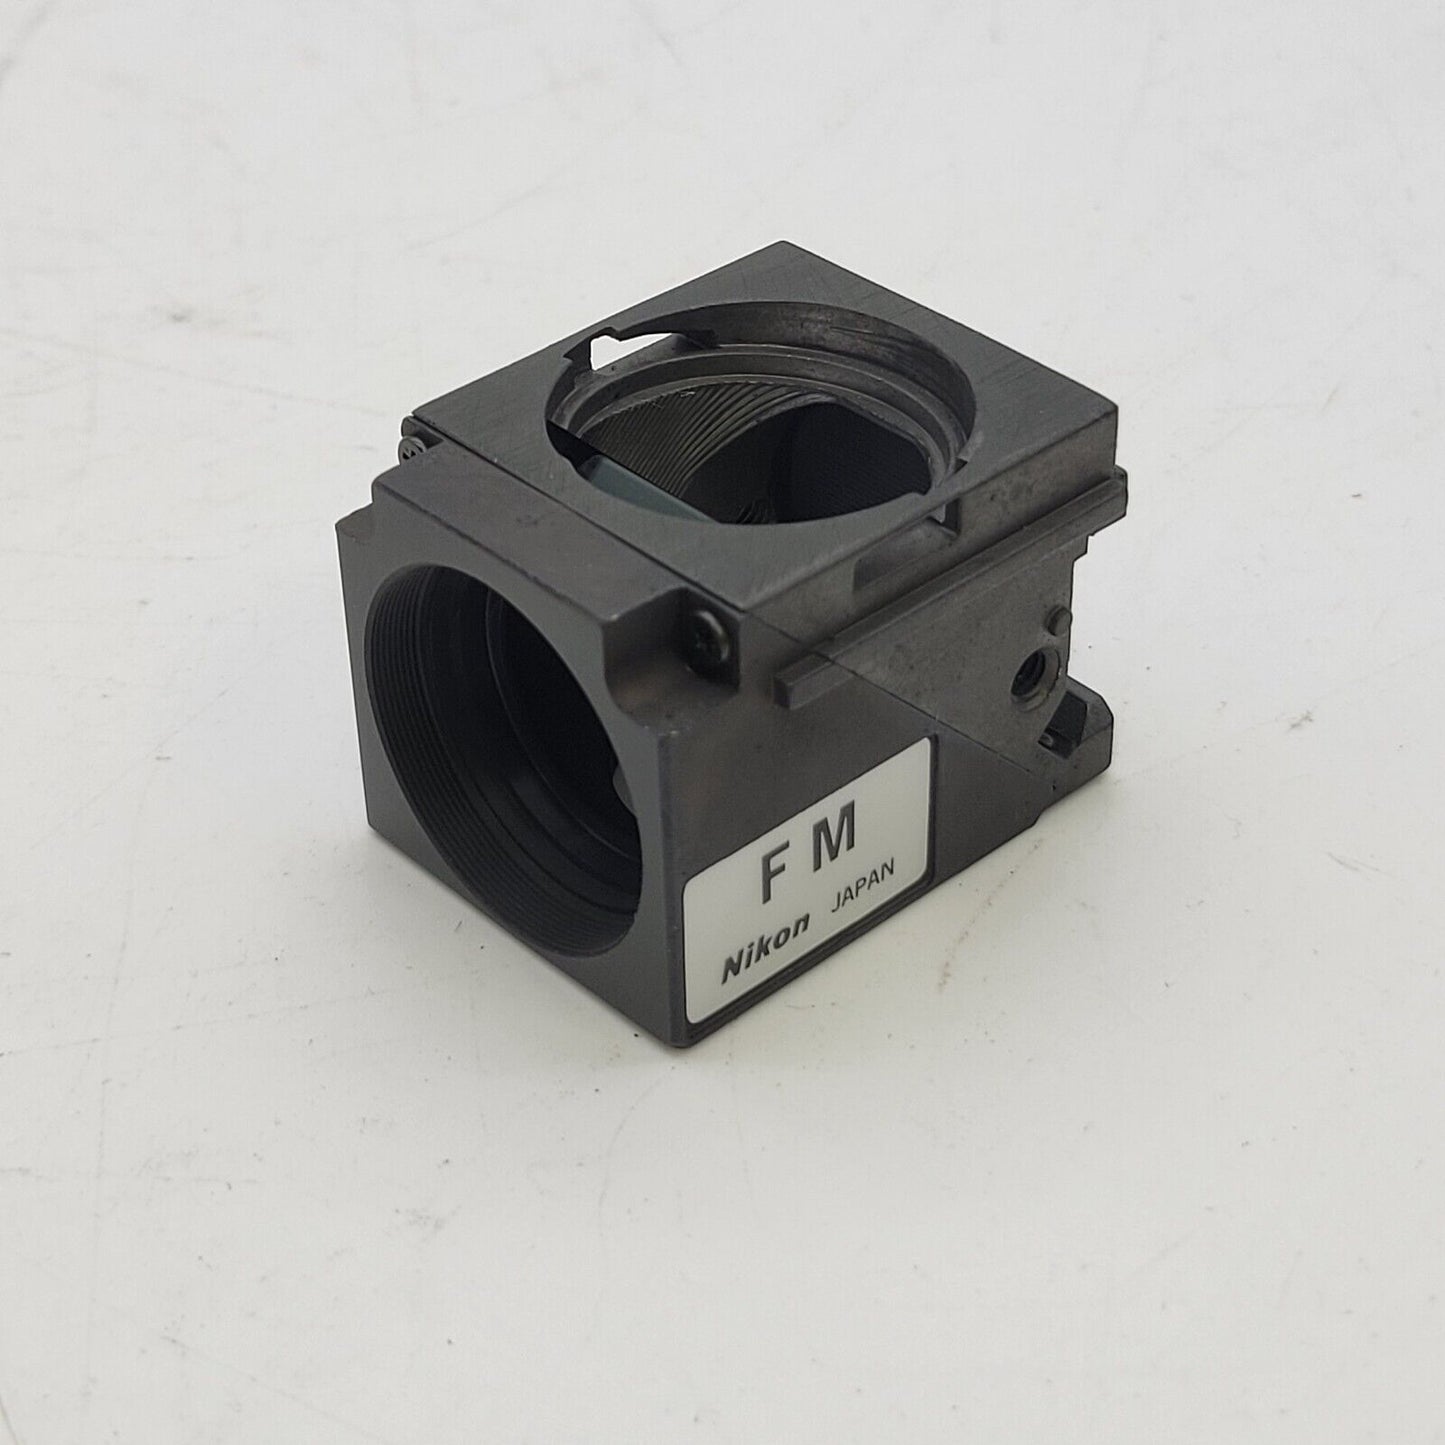 Nikon Microscope E800 Module w. Analyzer, FM Cube, IR Protection, & Camera Port - microscopemarketplace